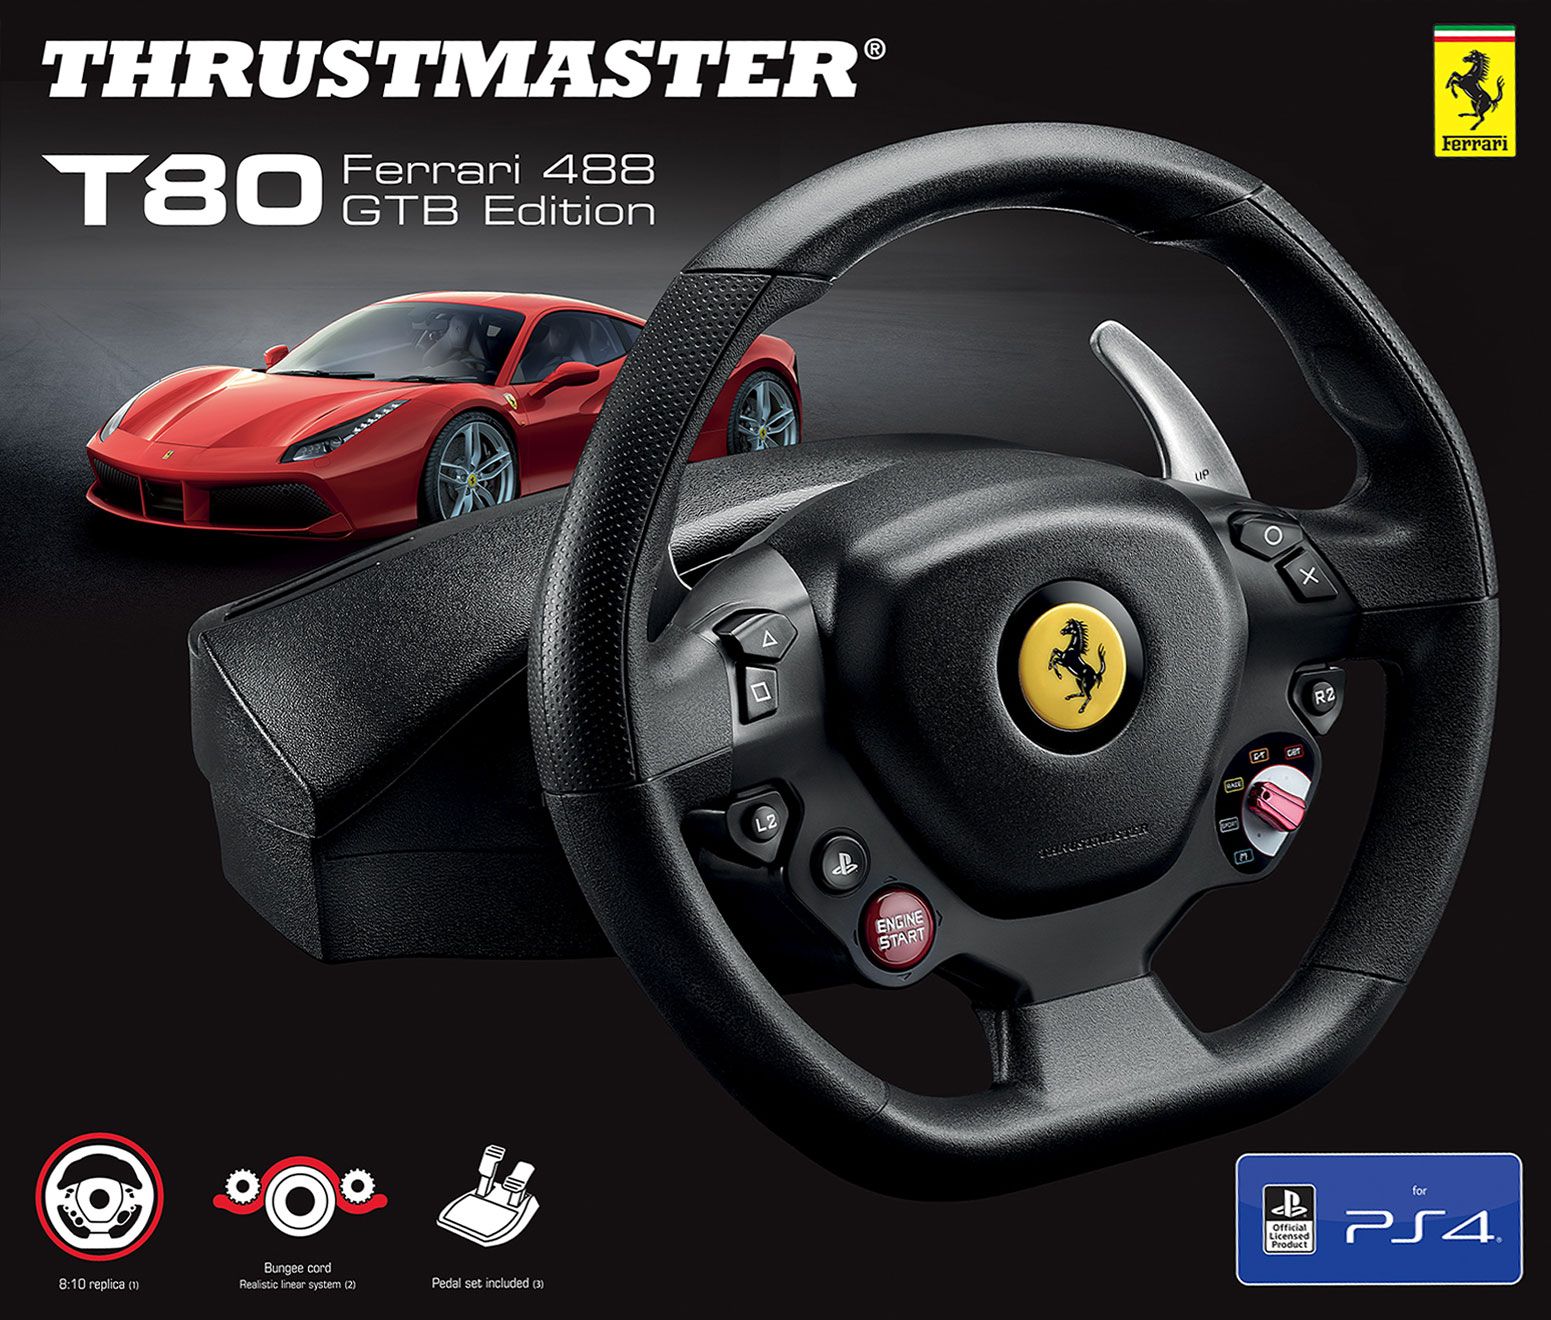 Thrustmaster t80 ferrari 488. Thrustmaster t80 Racing Wheel Ferrari. Thrustmaster t80 Ferrari 488 GTB Edition. Thrustmaster 488 Ferrari. Thrustmaster t80 Racing Wheel.